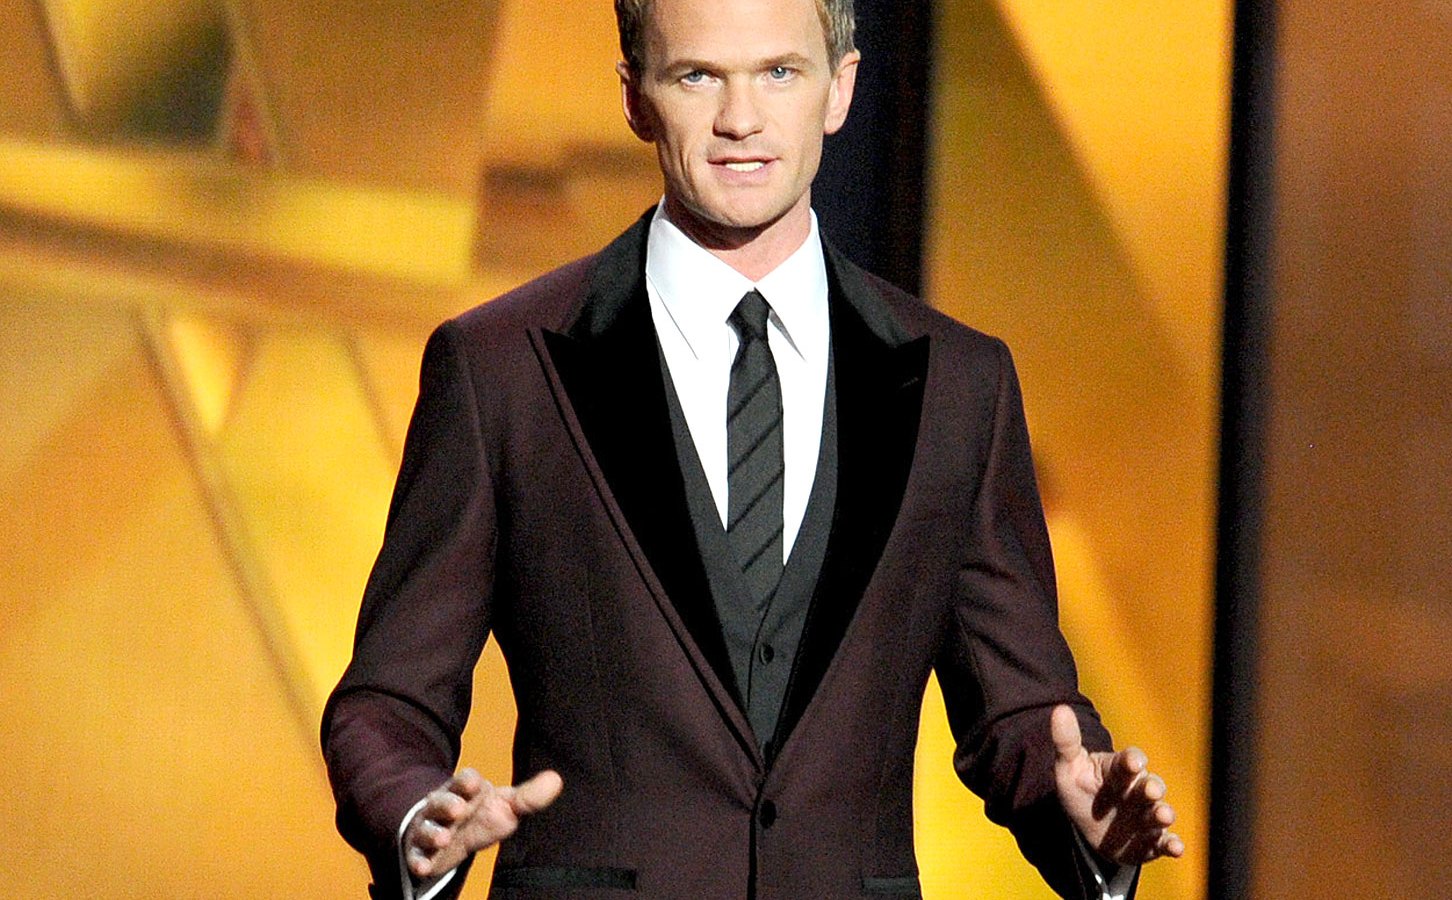 Neil Patrick Harris hosts the 2013 Emmy Awards